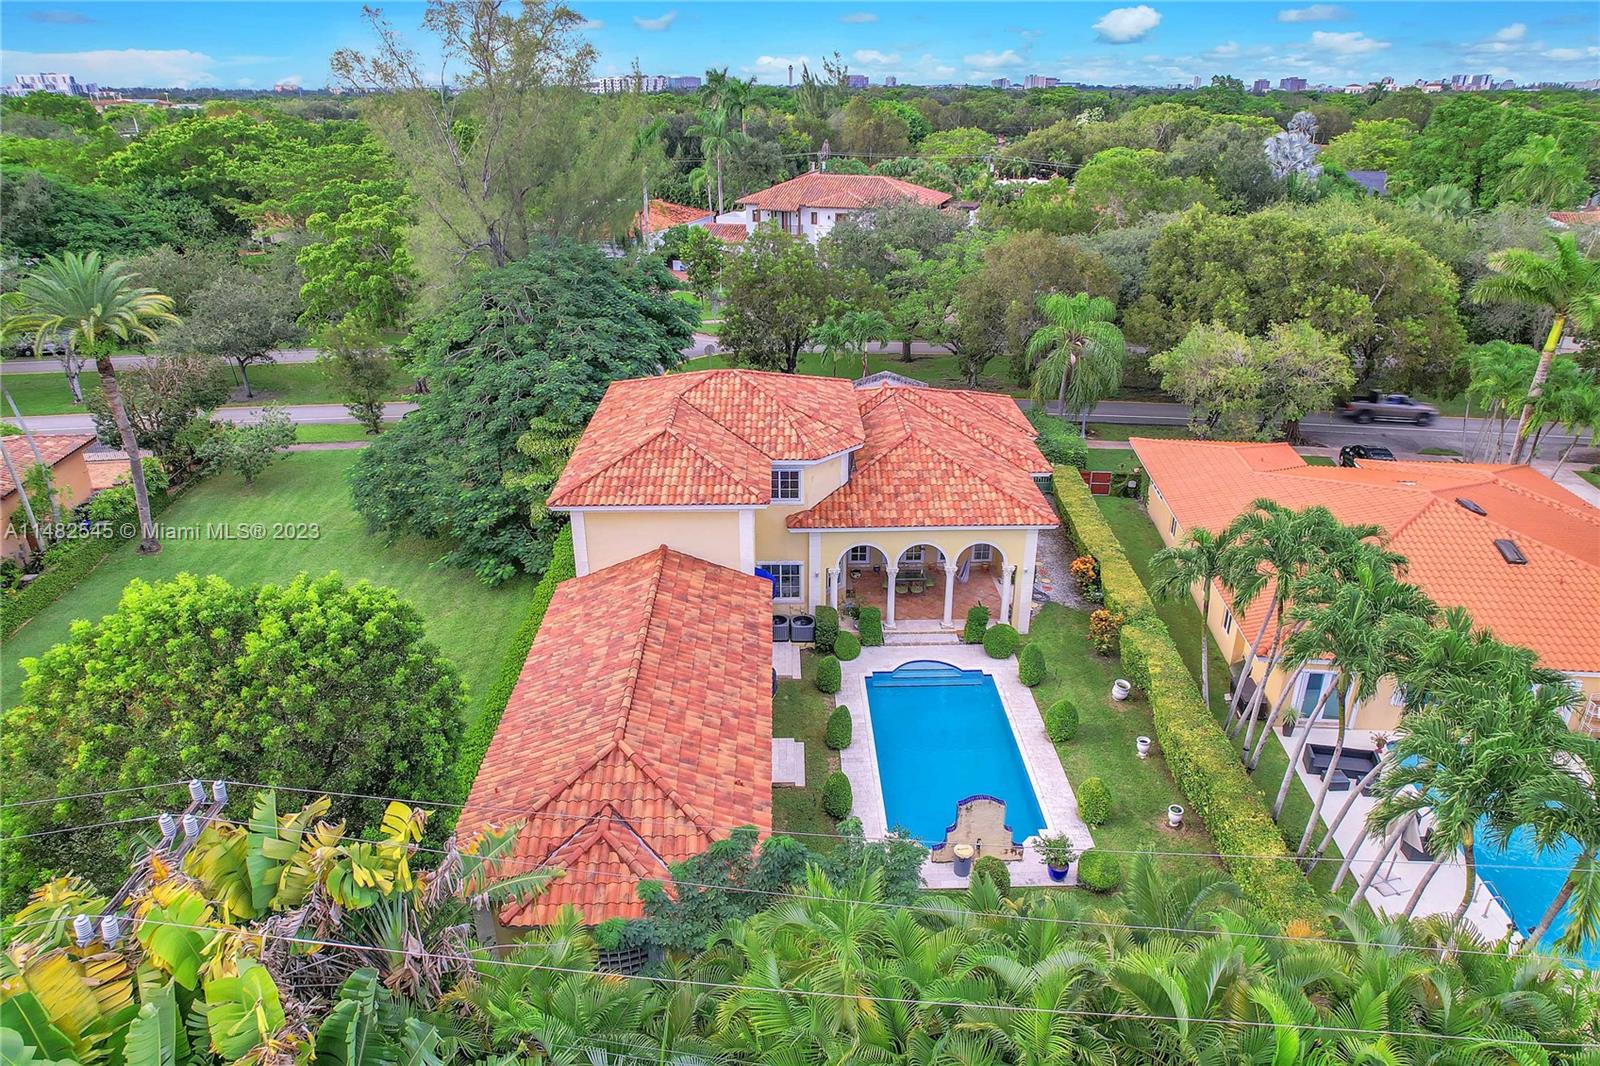 Property for Sale at 1334 Alhambra Cir Cir, Coral Gables, Broward County, Florida - Bedrooms: 5 
Bathrooms: 5  - $3,200,000